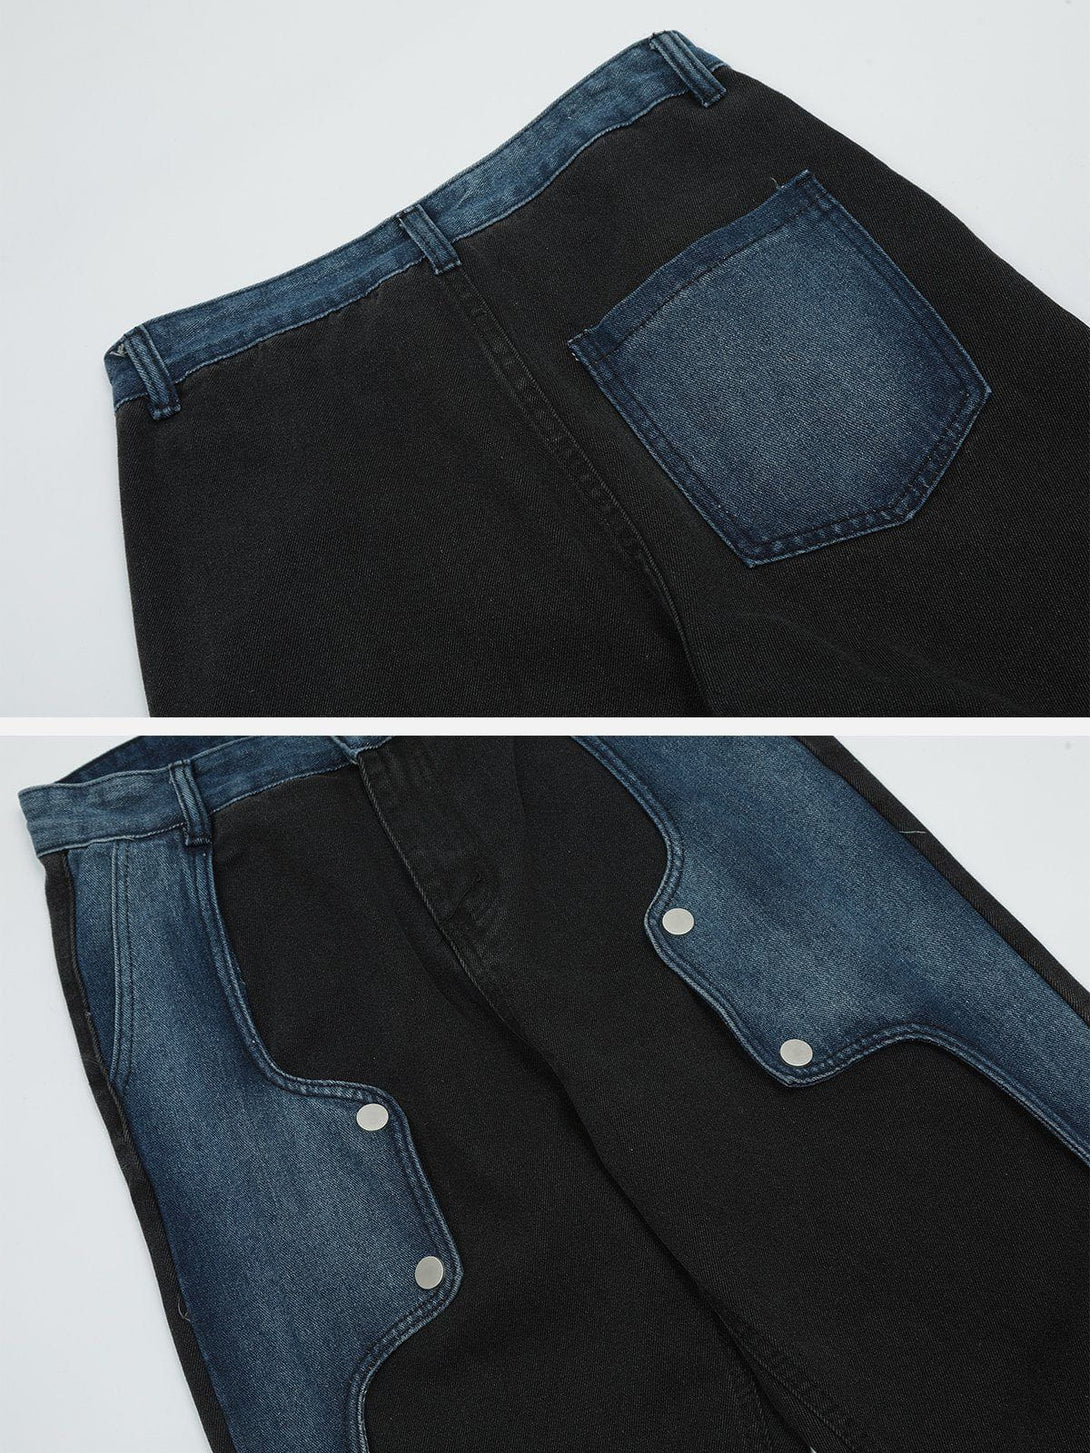 Levefly - Irregular Patchwork Jeans - Streetwear Fashion - levefly.com